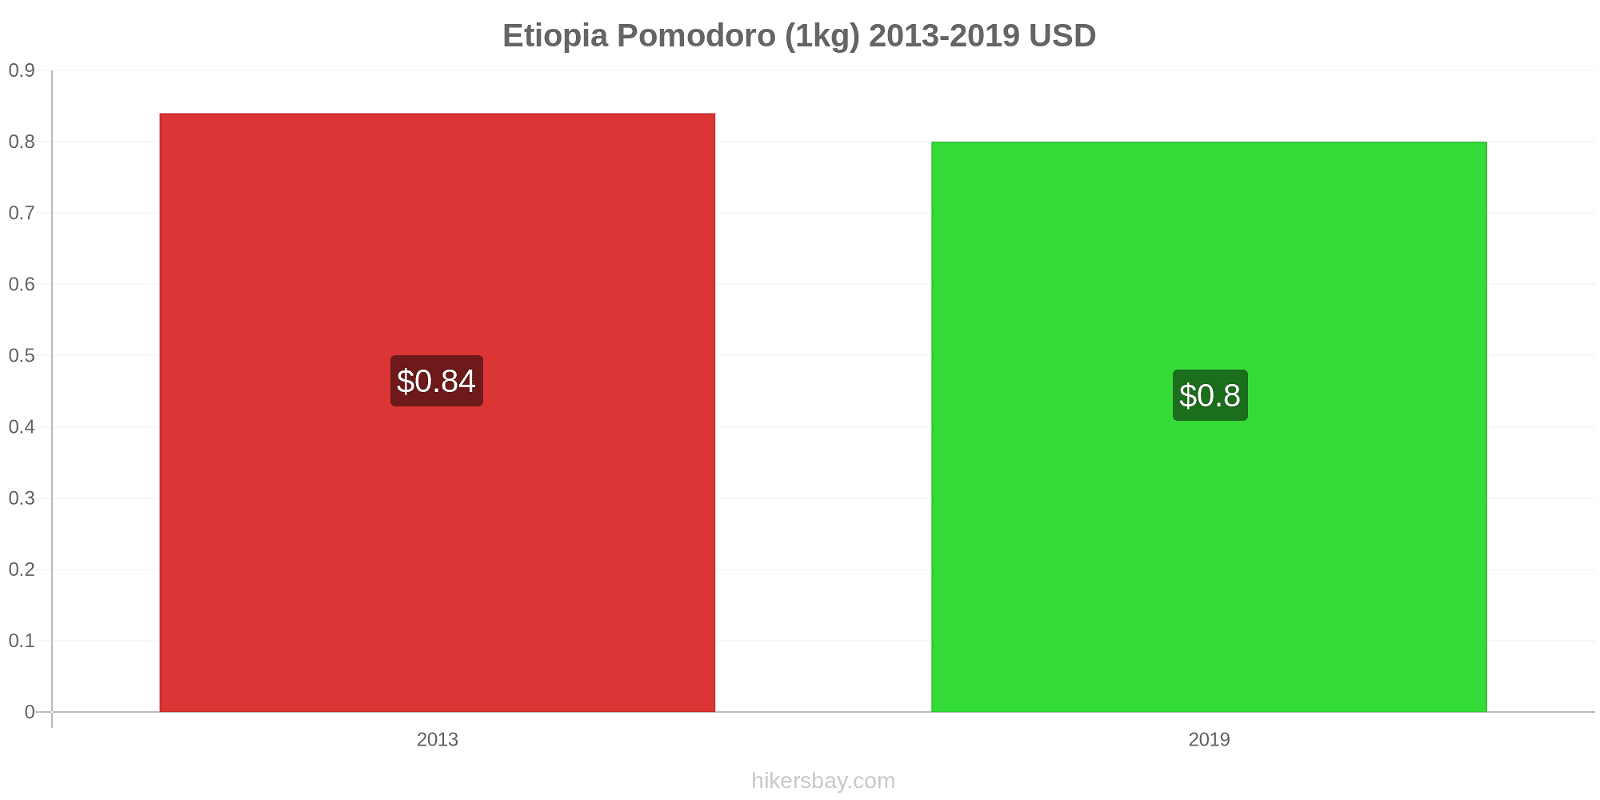 Etiopia variazioni di prezzo Pomodoro (1kg) hikersbay.com